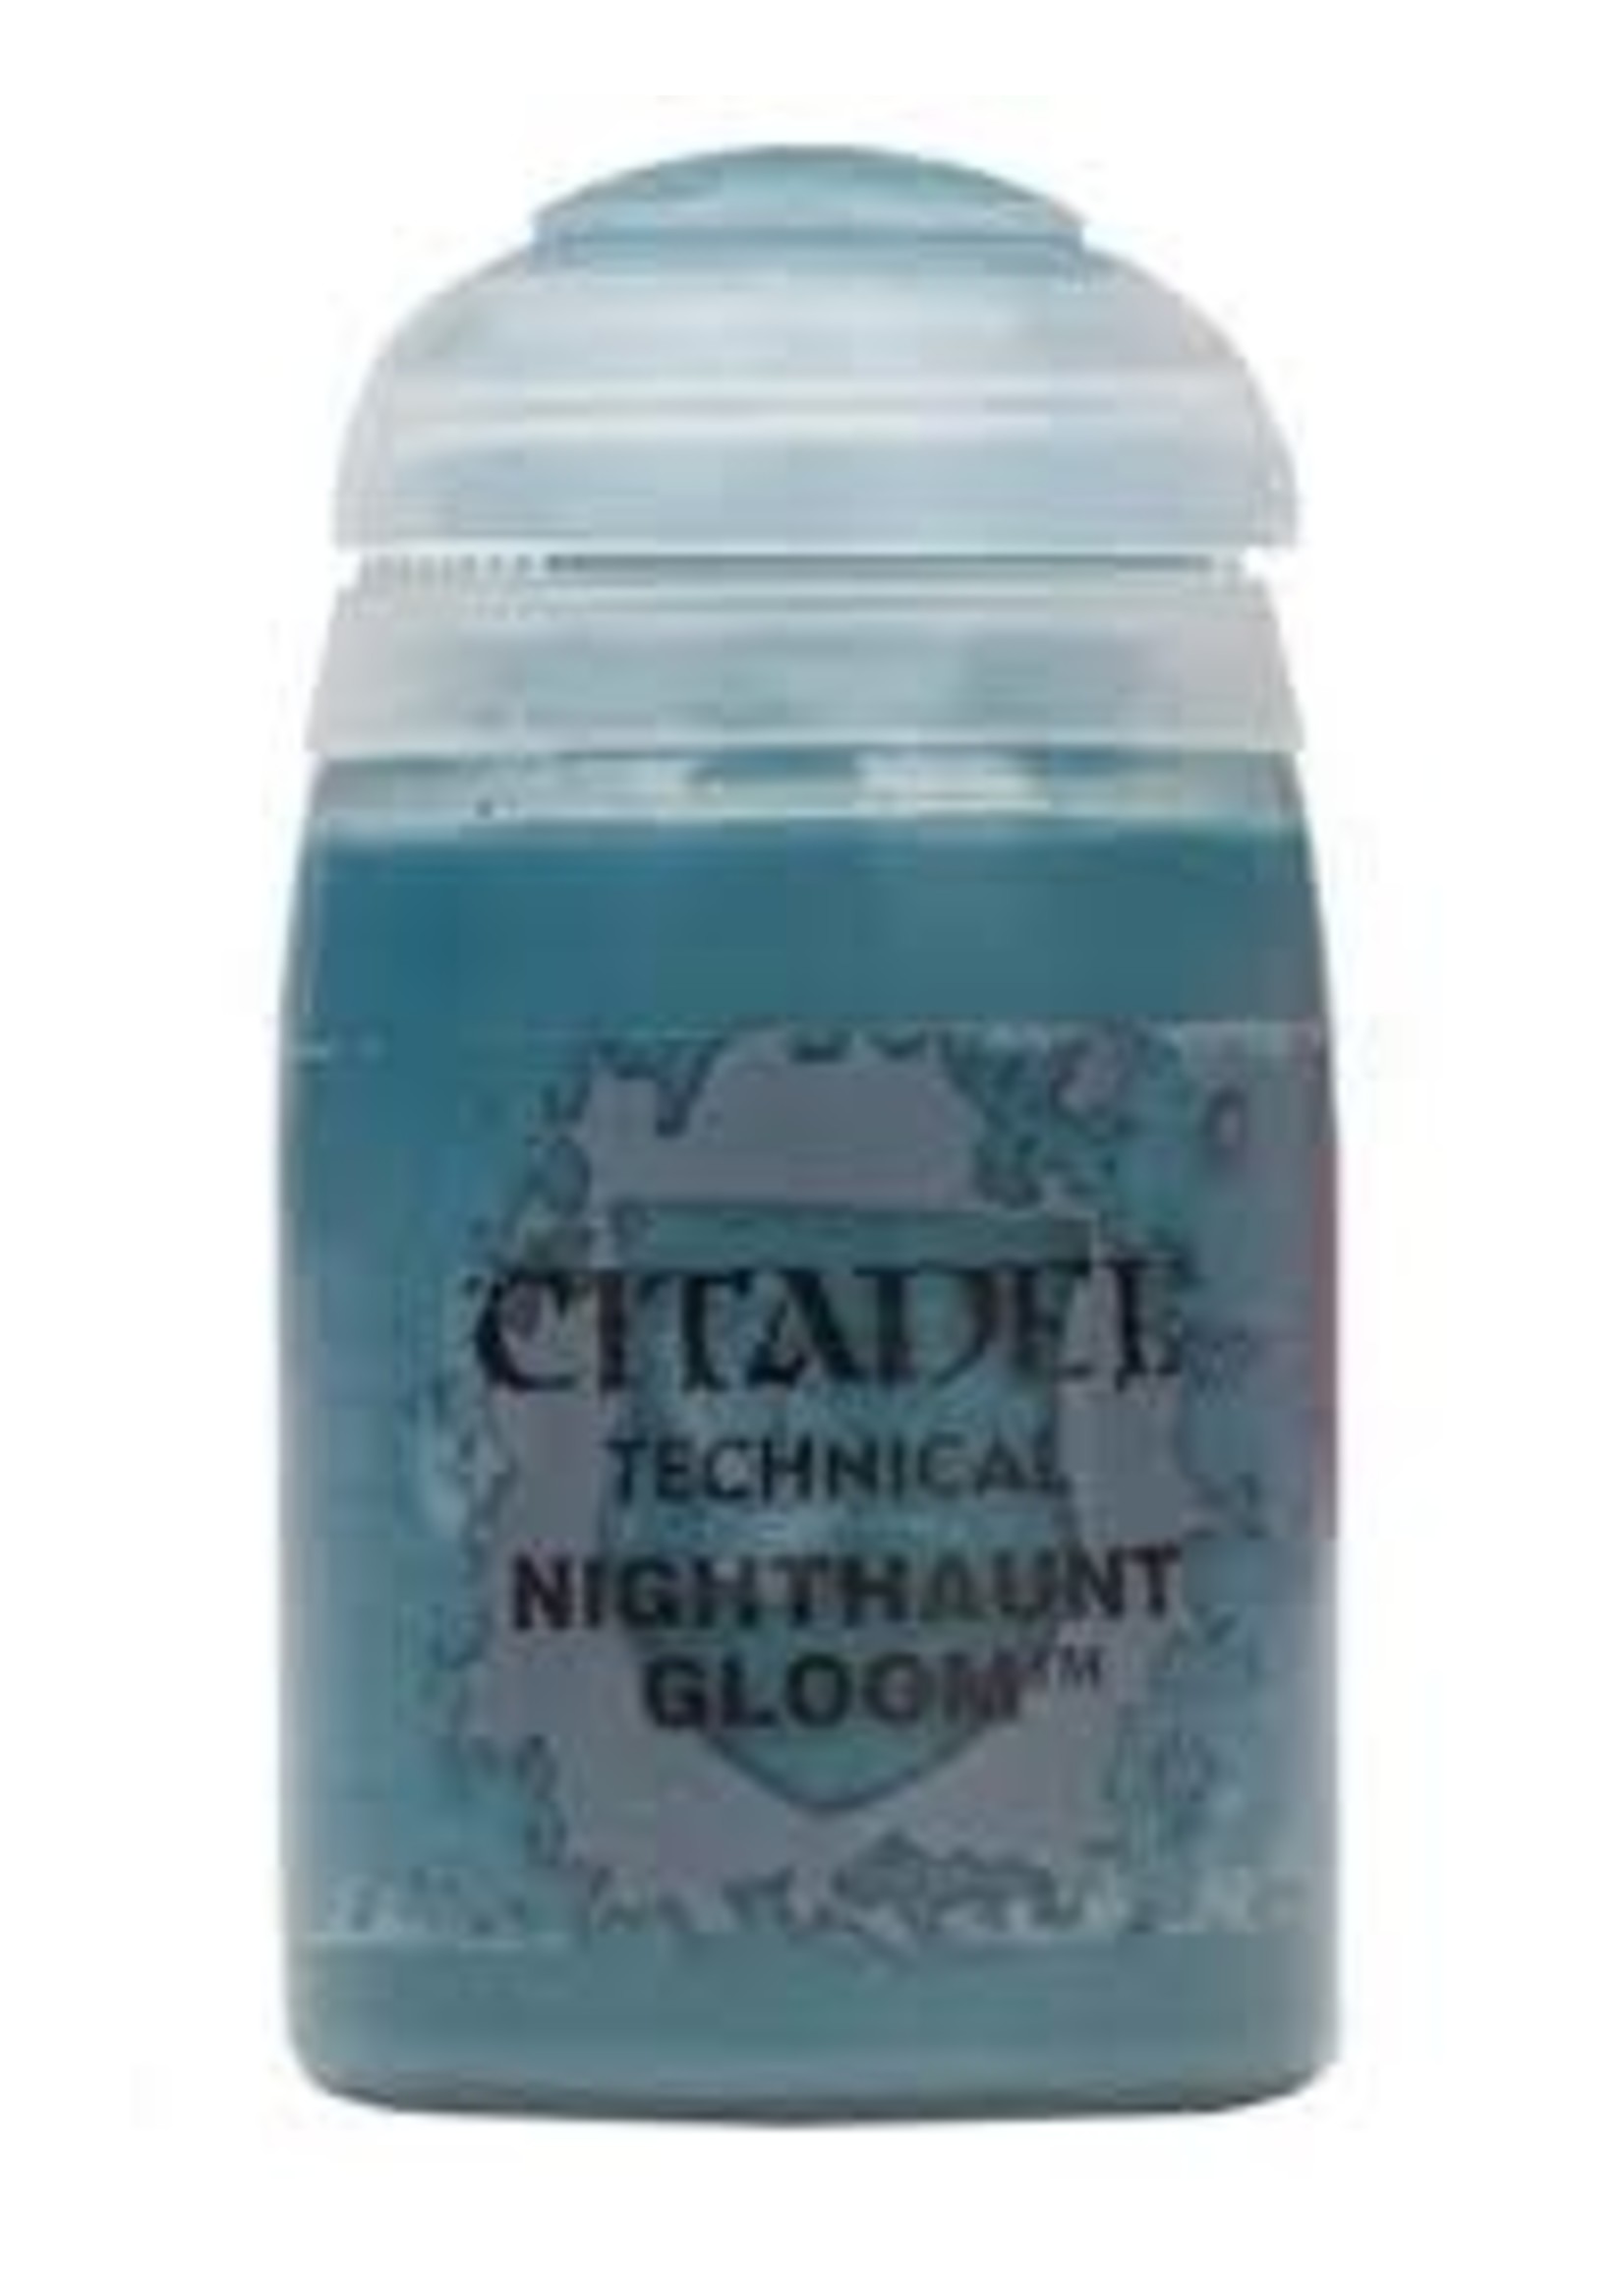 Citadel Nighthaunt Gloom 24 mL